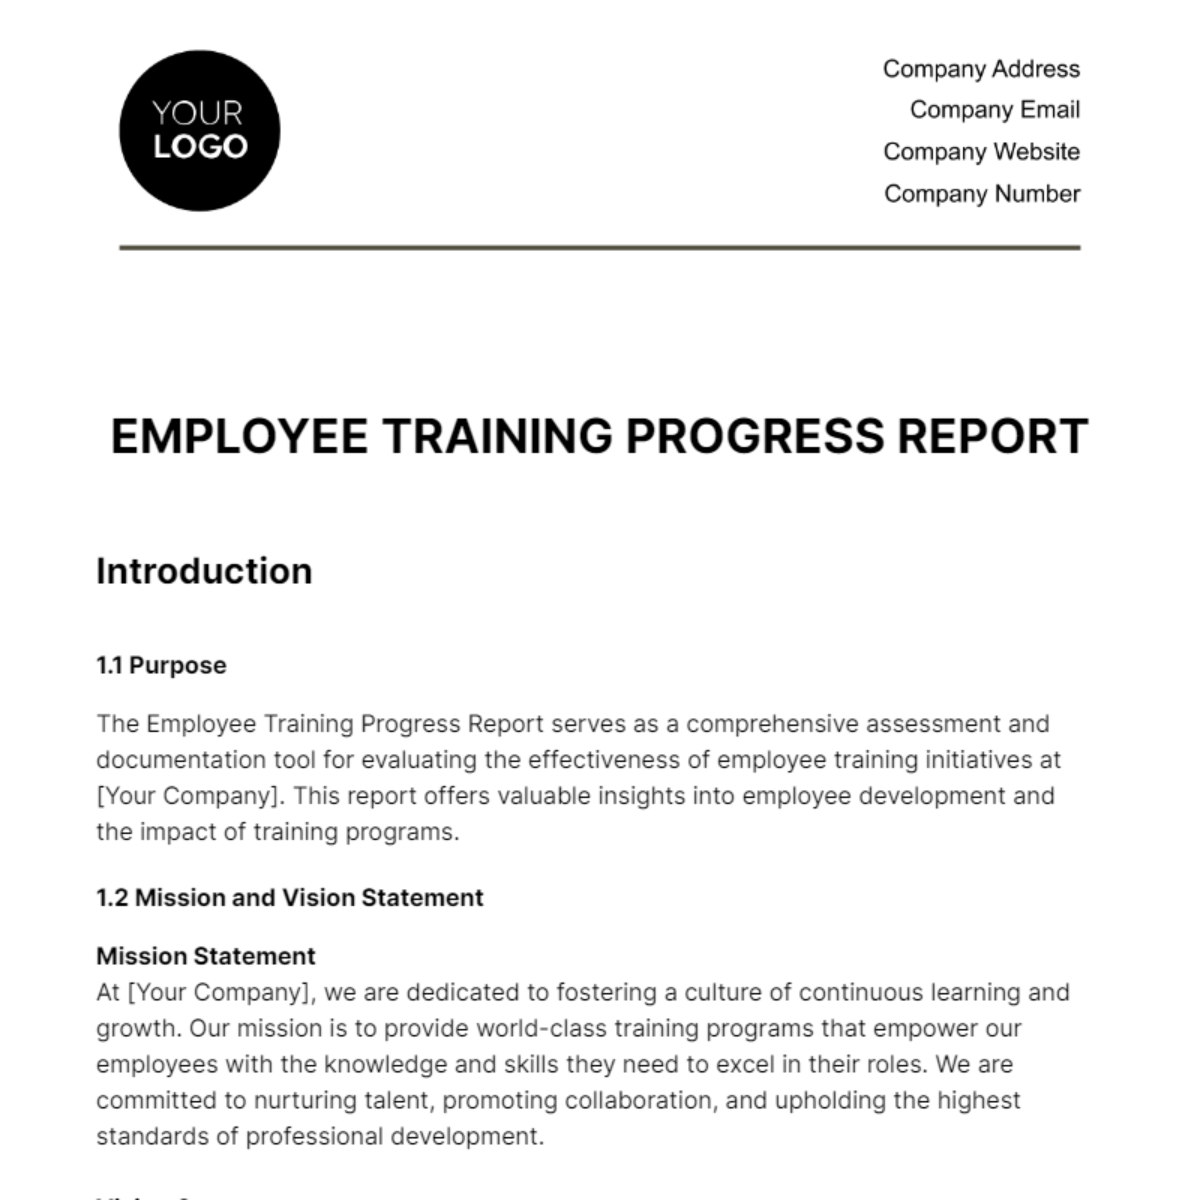 Employee Training Progress Report HR Template